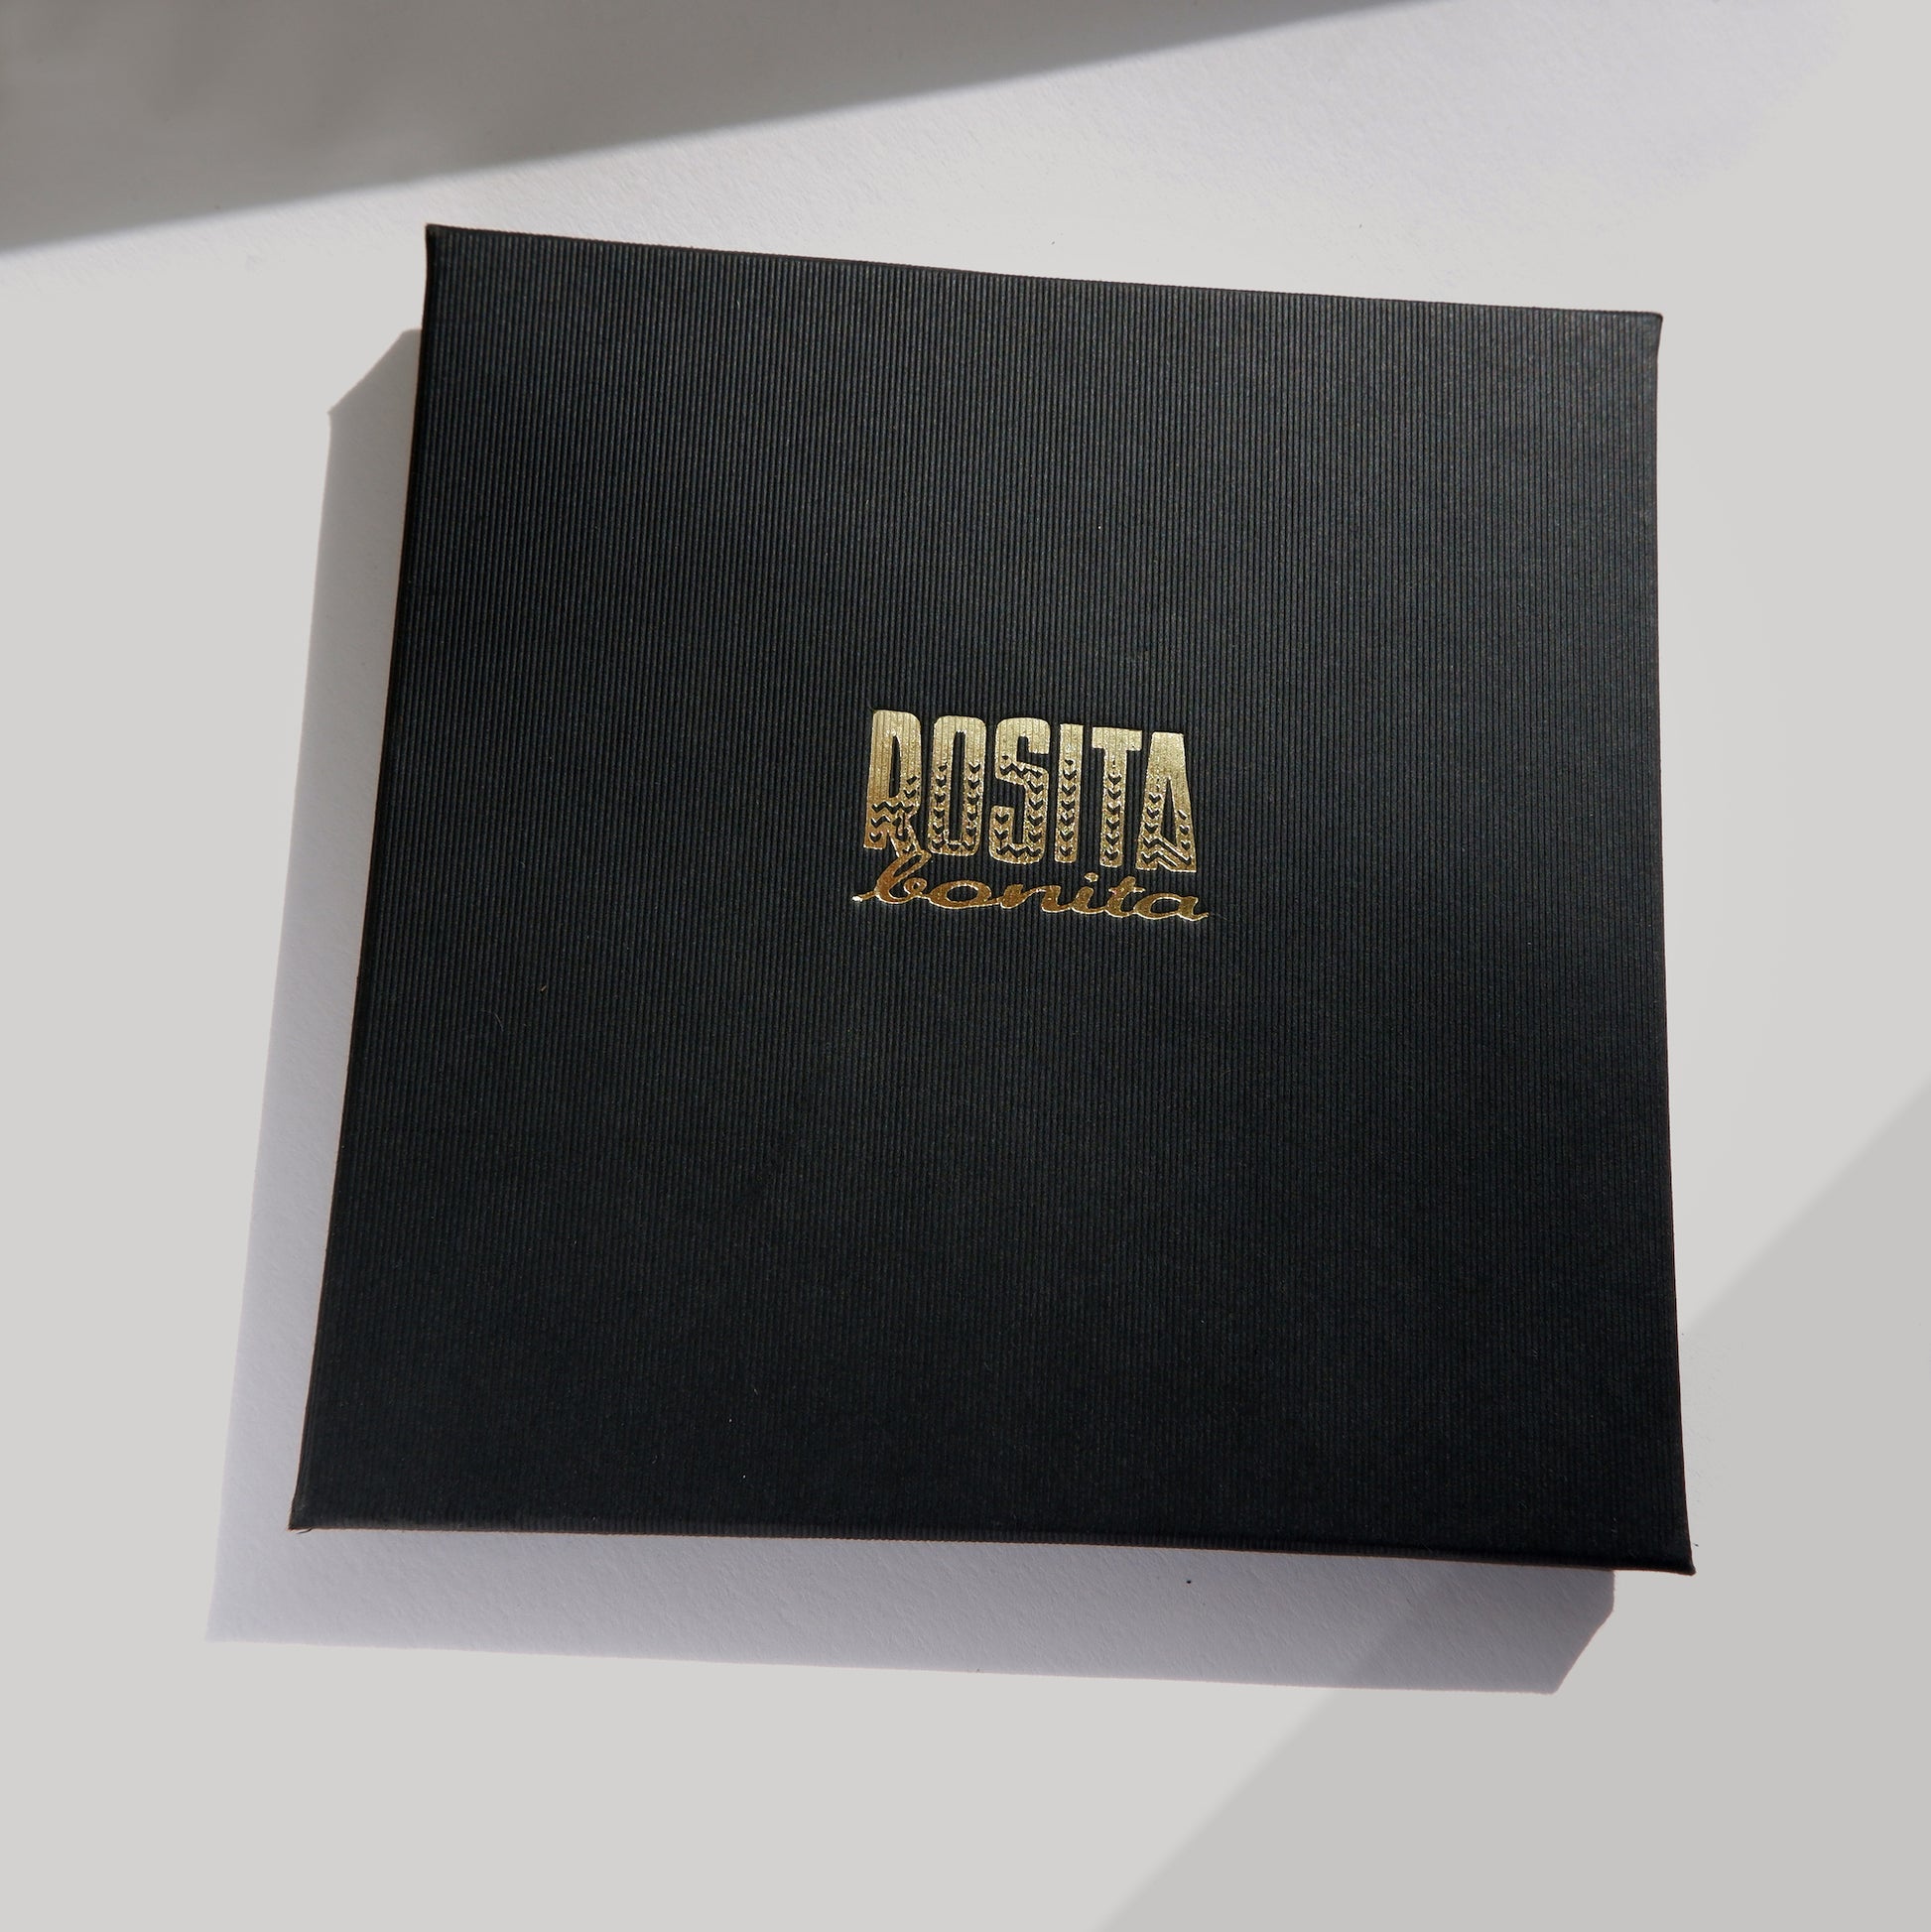 large ribbed black cardboard box with Rosita bonita logo in gold